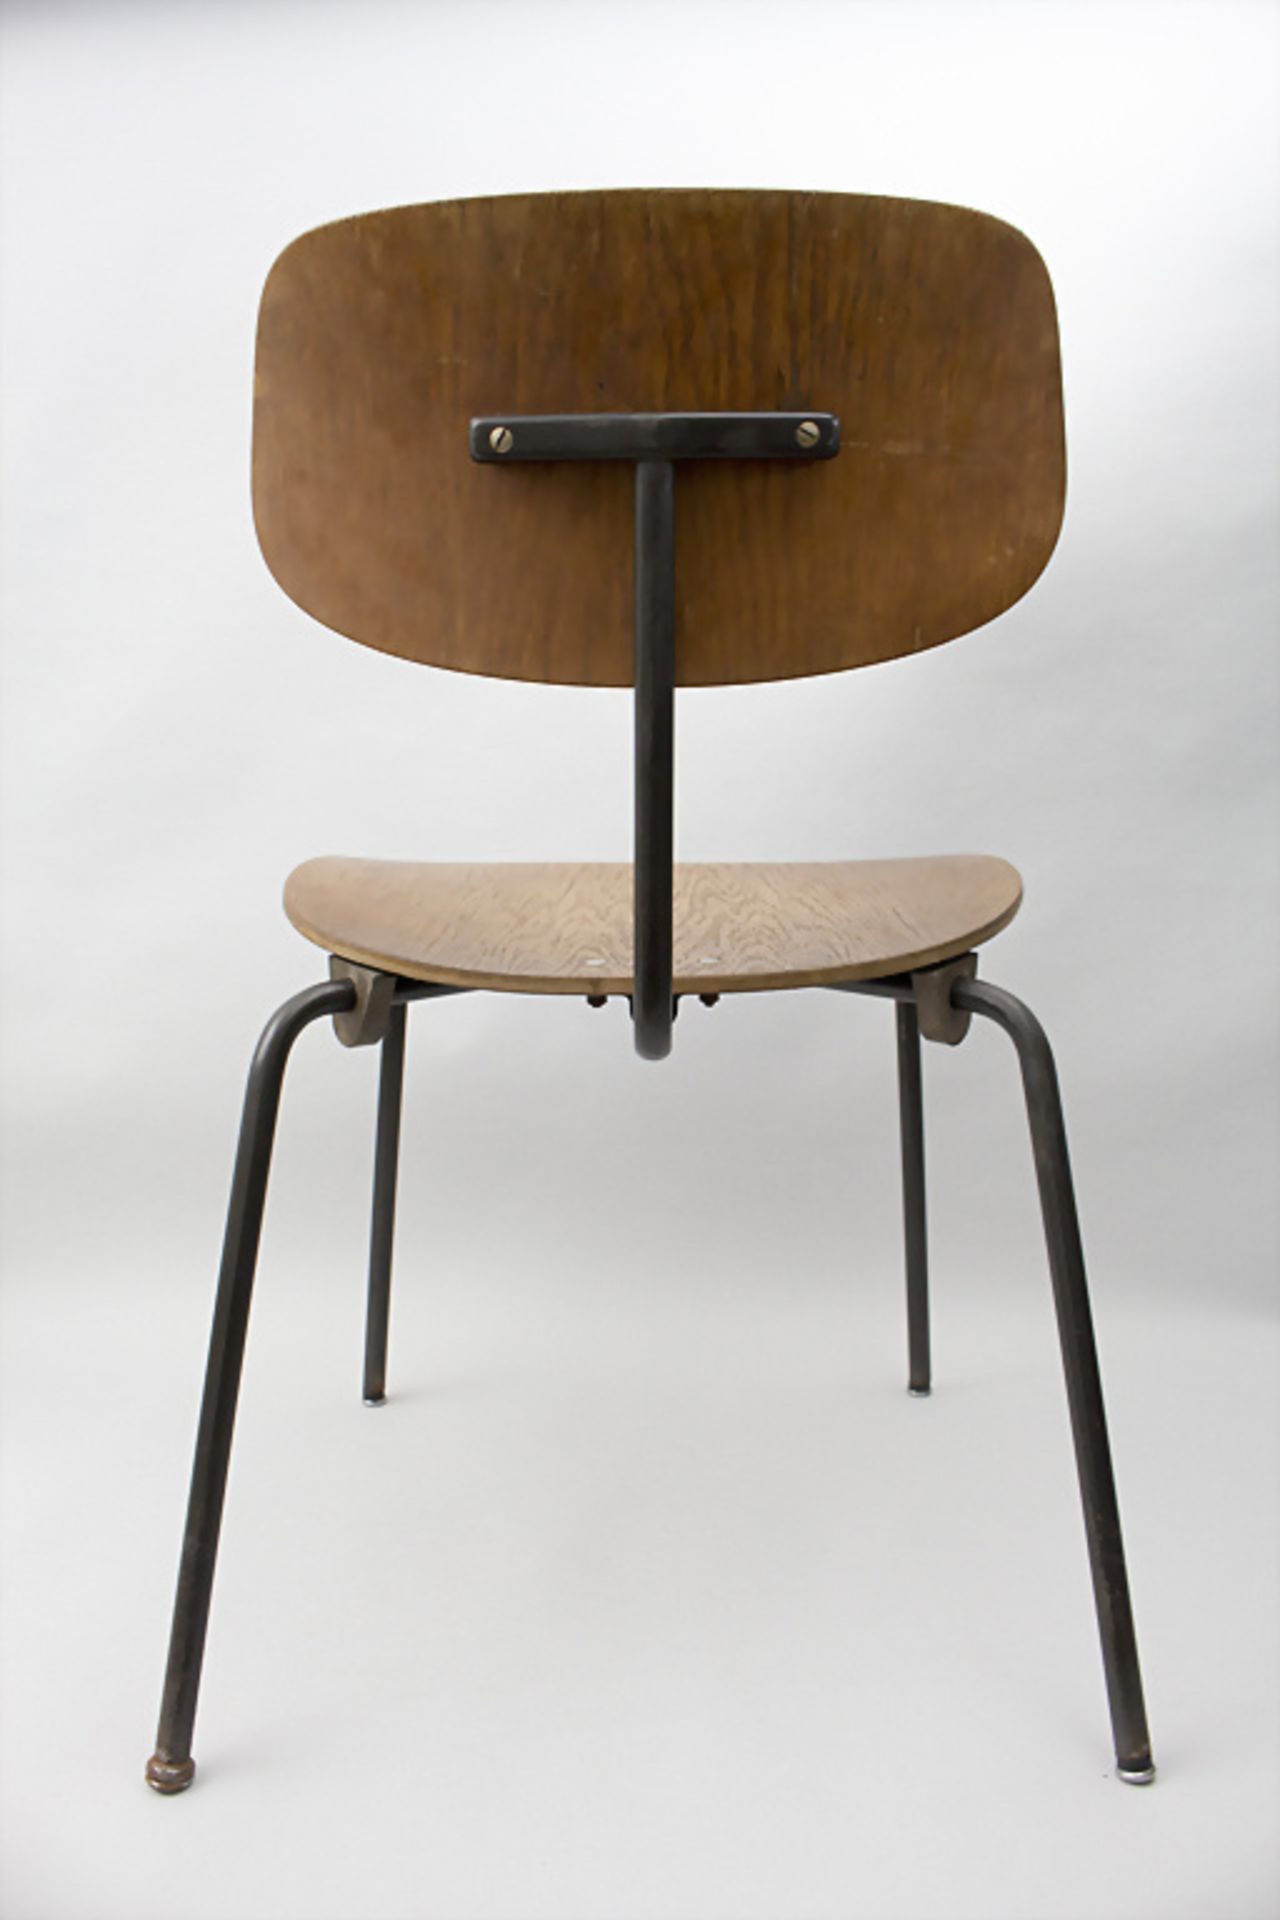 Stuhl / A chair, nach Entwurf Egon Eiermann, um 1950 - Image 4 of 5